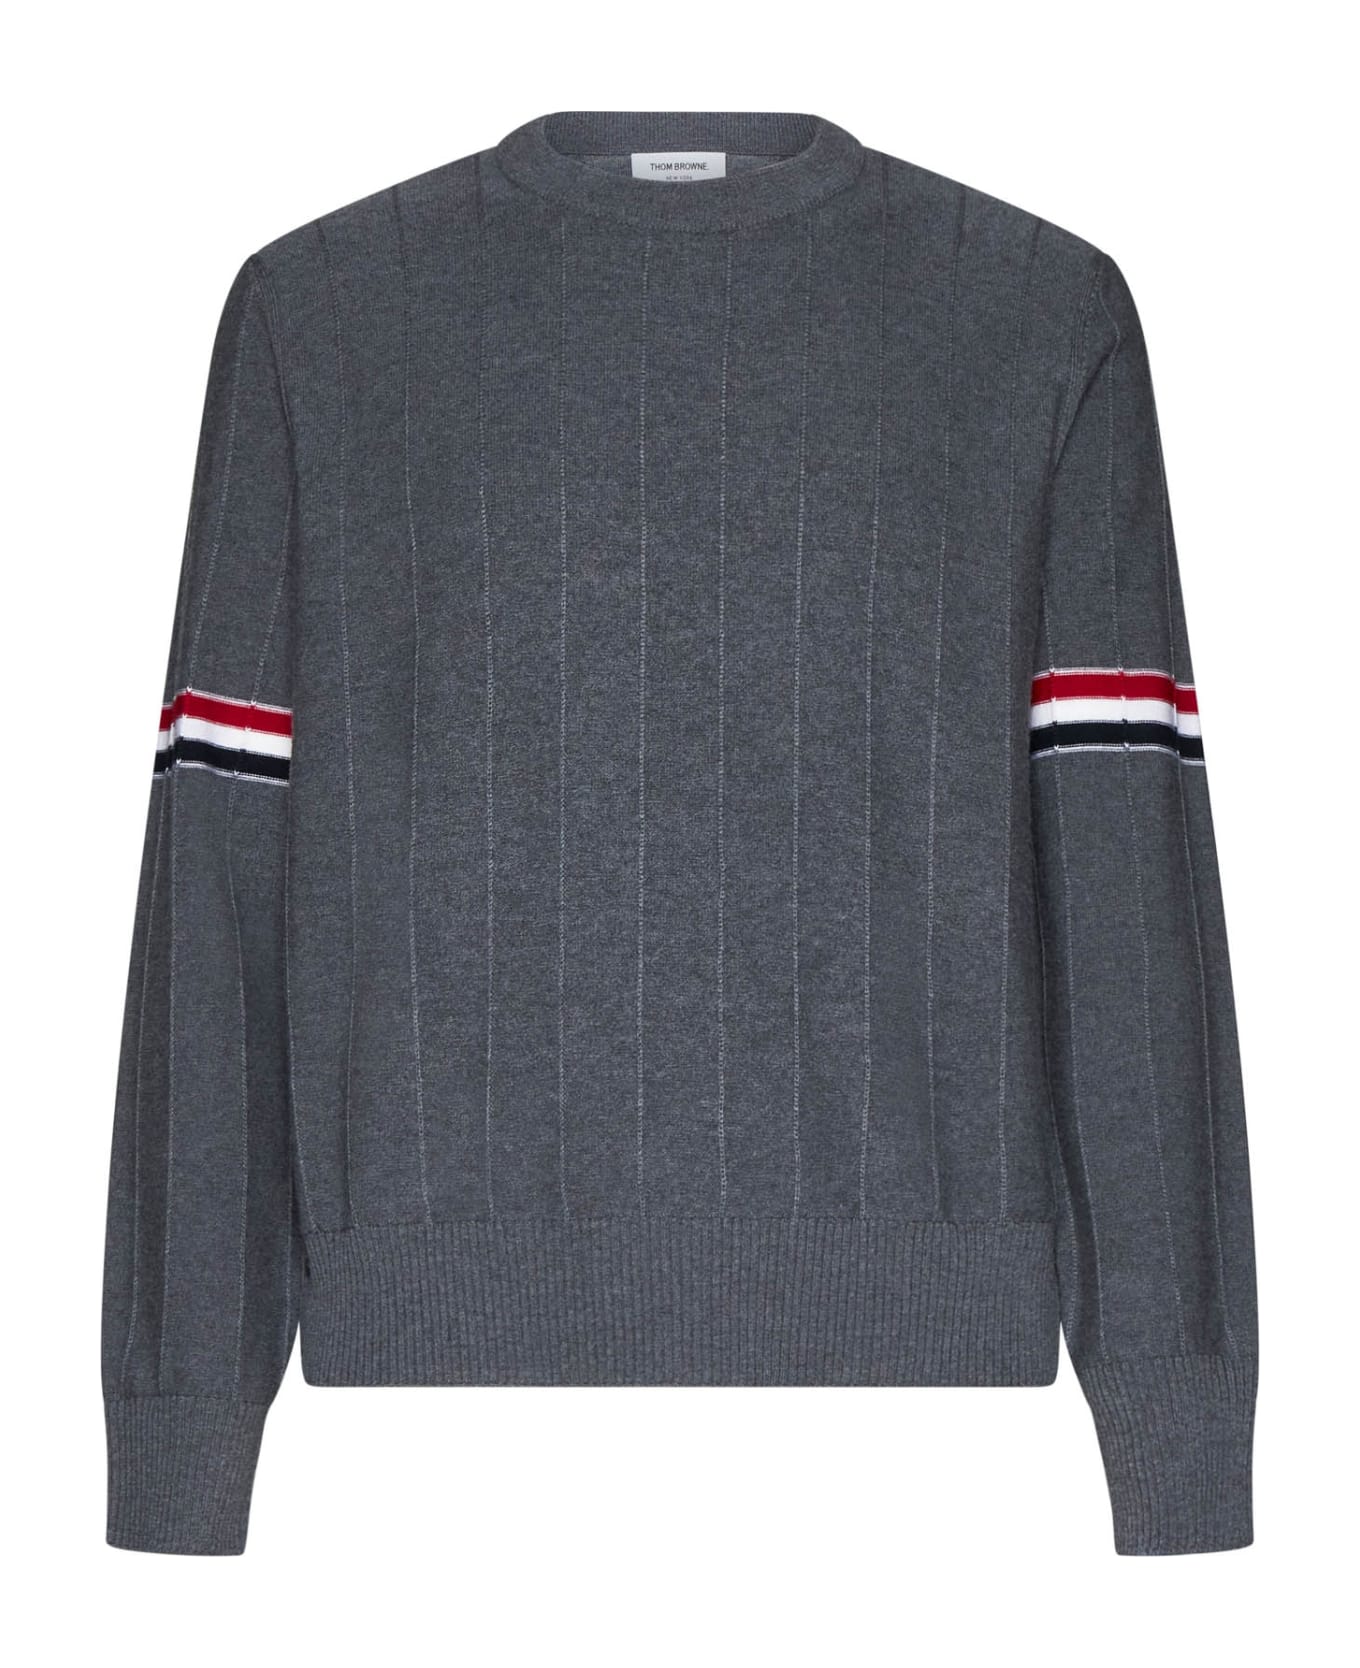 Thom Browne Sweater - Med grey